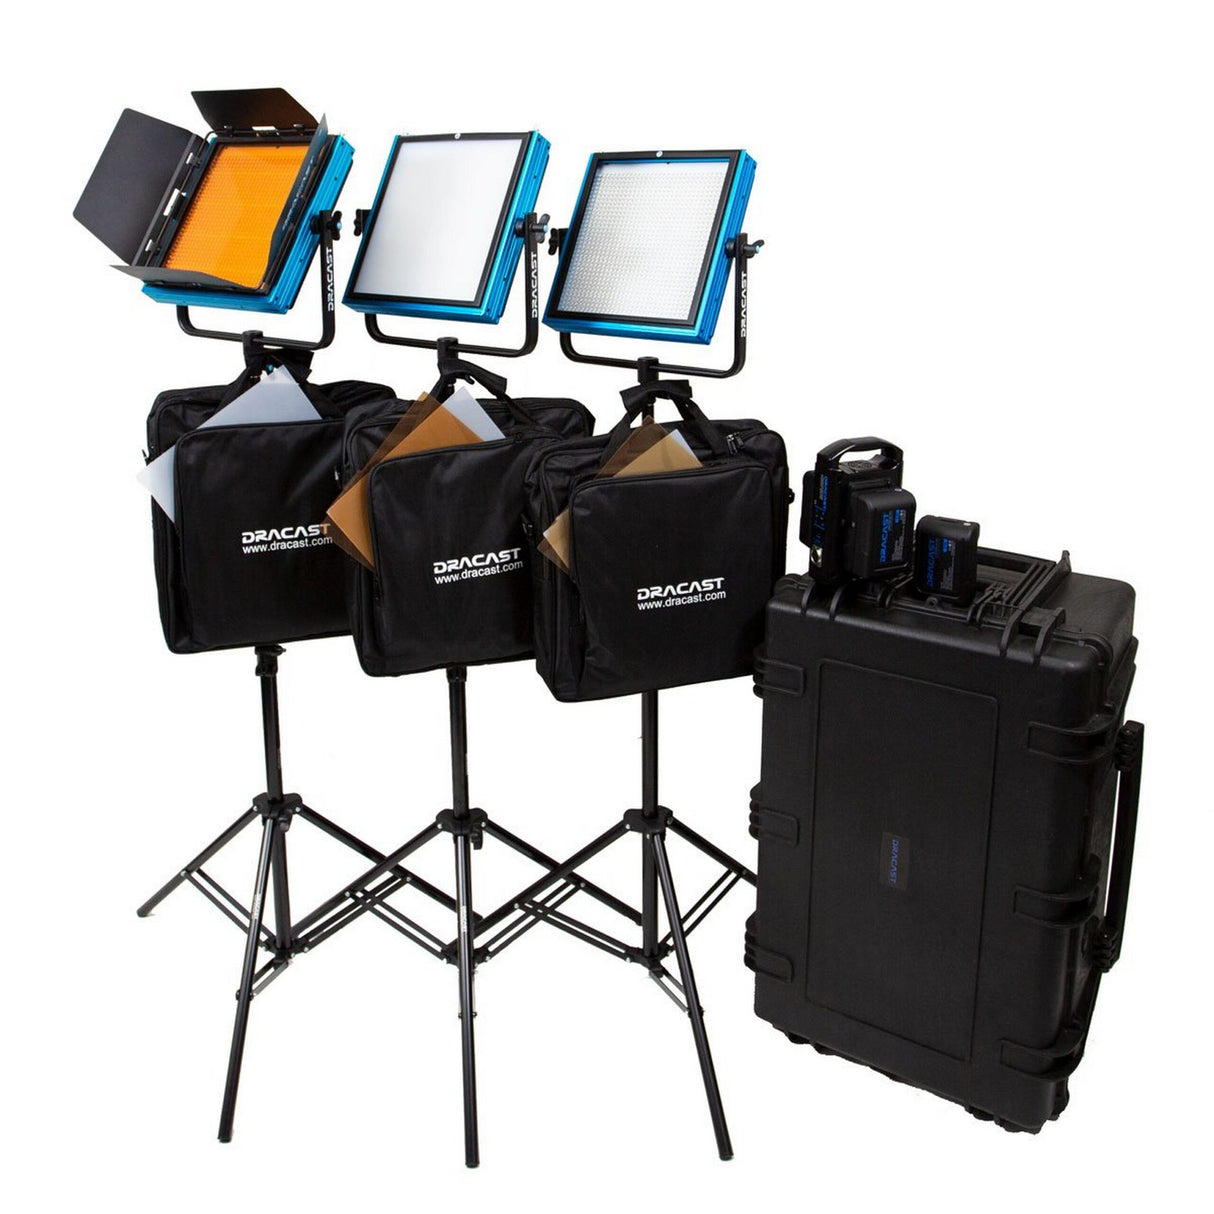 Dracast DRSTUDV LED1000 Pro Series Daylight 3-Light Studio Kit with V-Mount Battery Plates